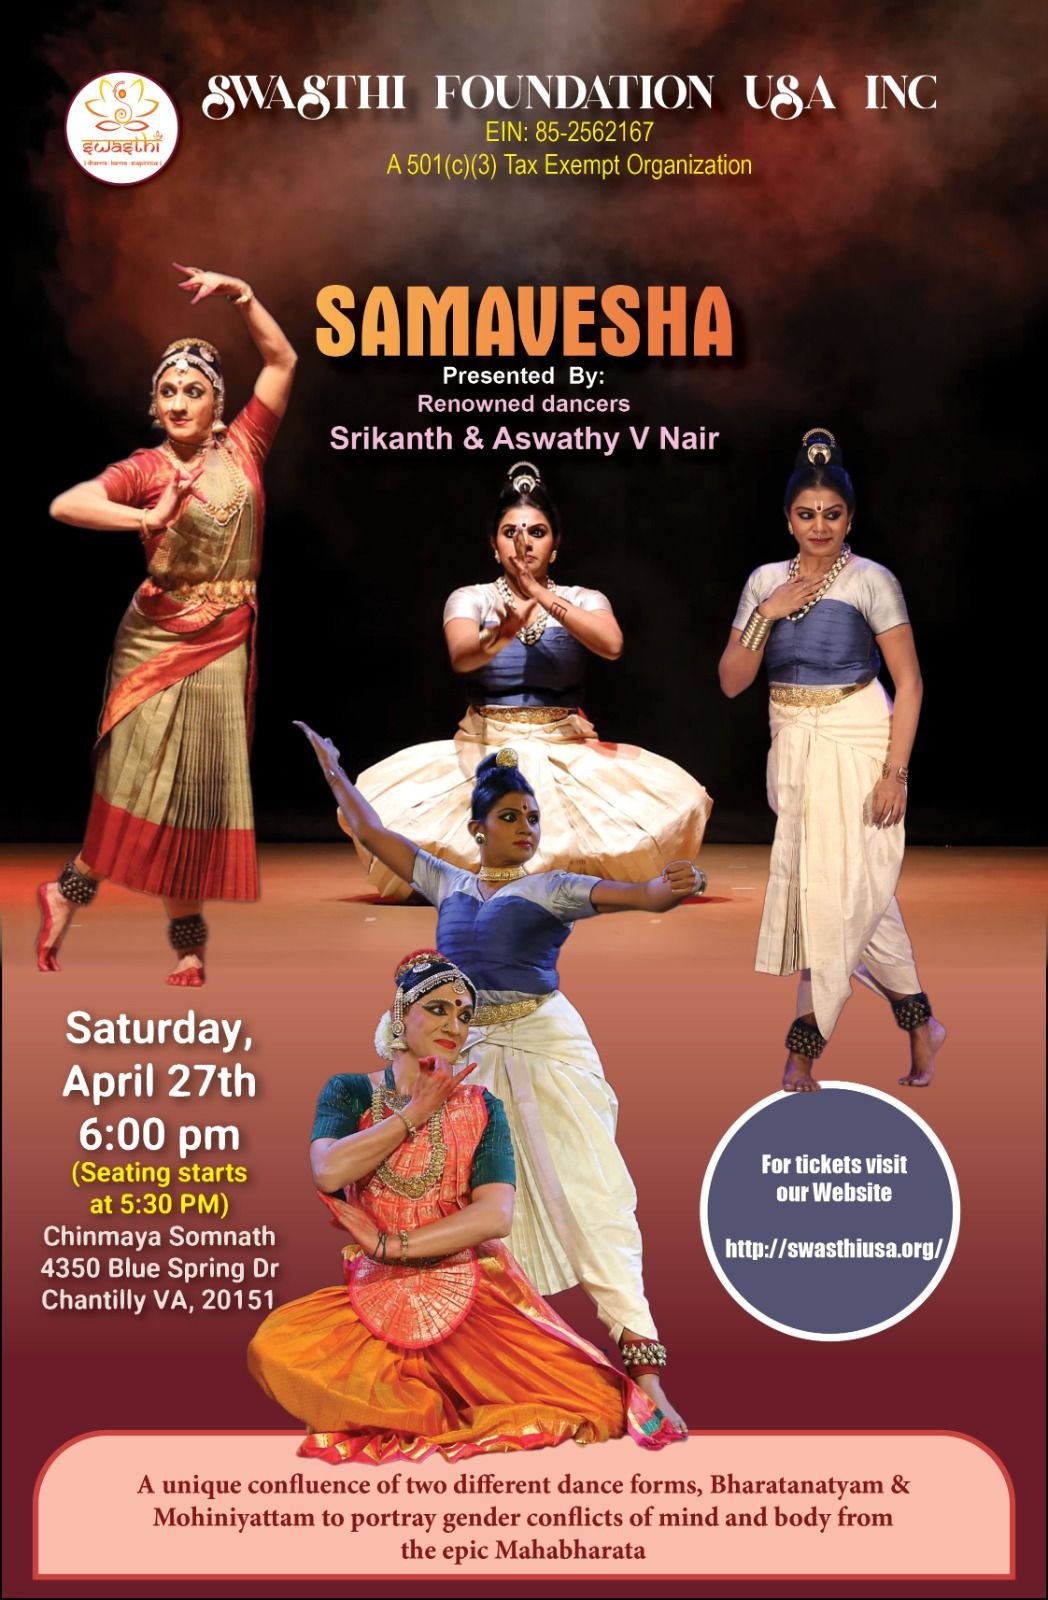 Samavesha-Presented By: Srikanth & Aswathy